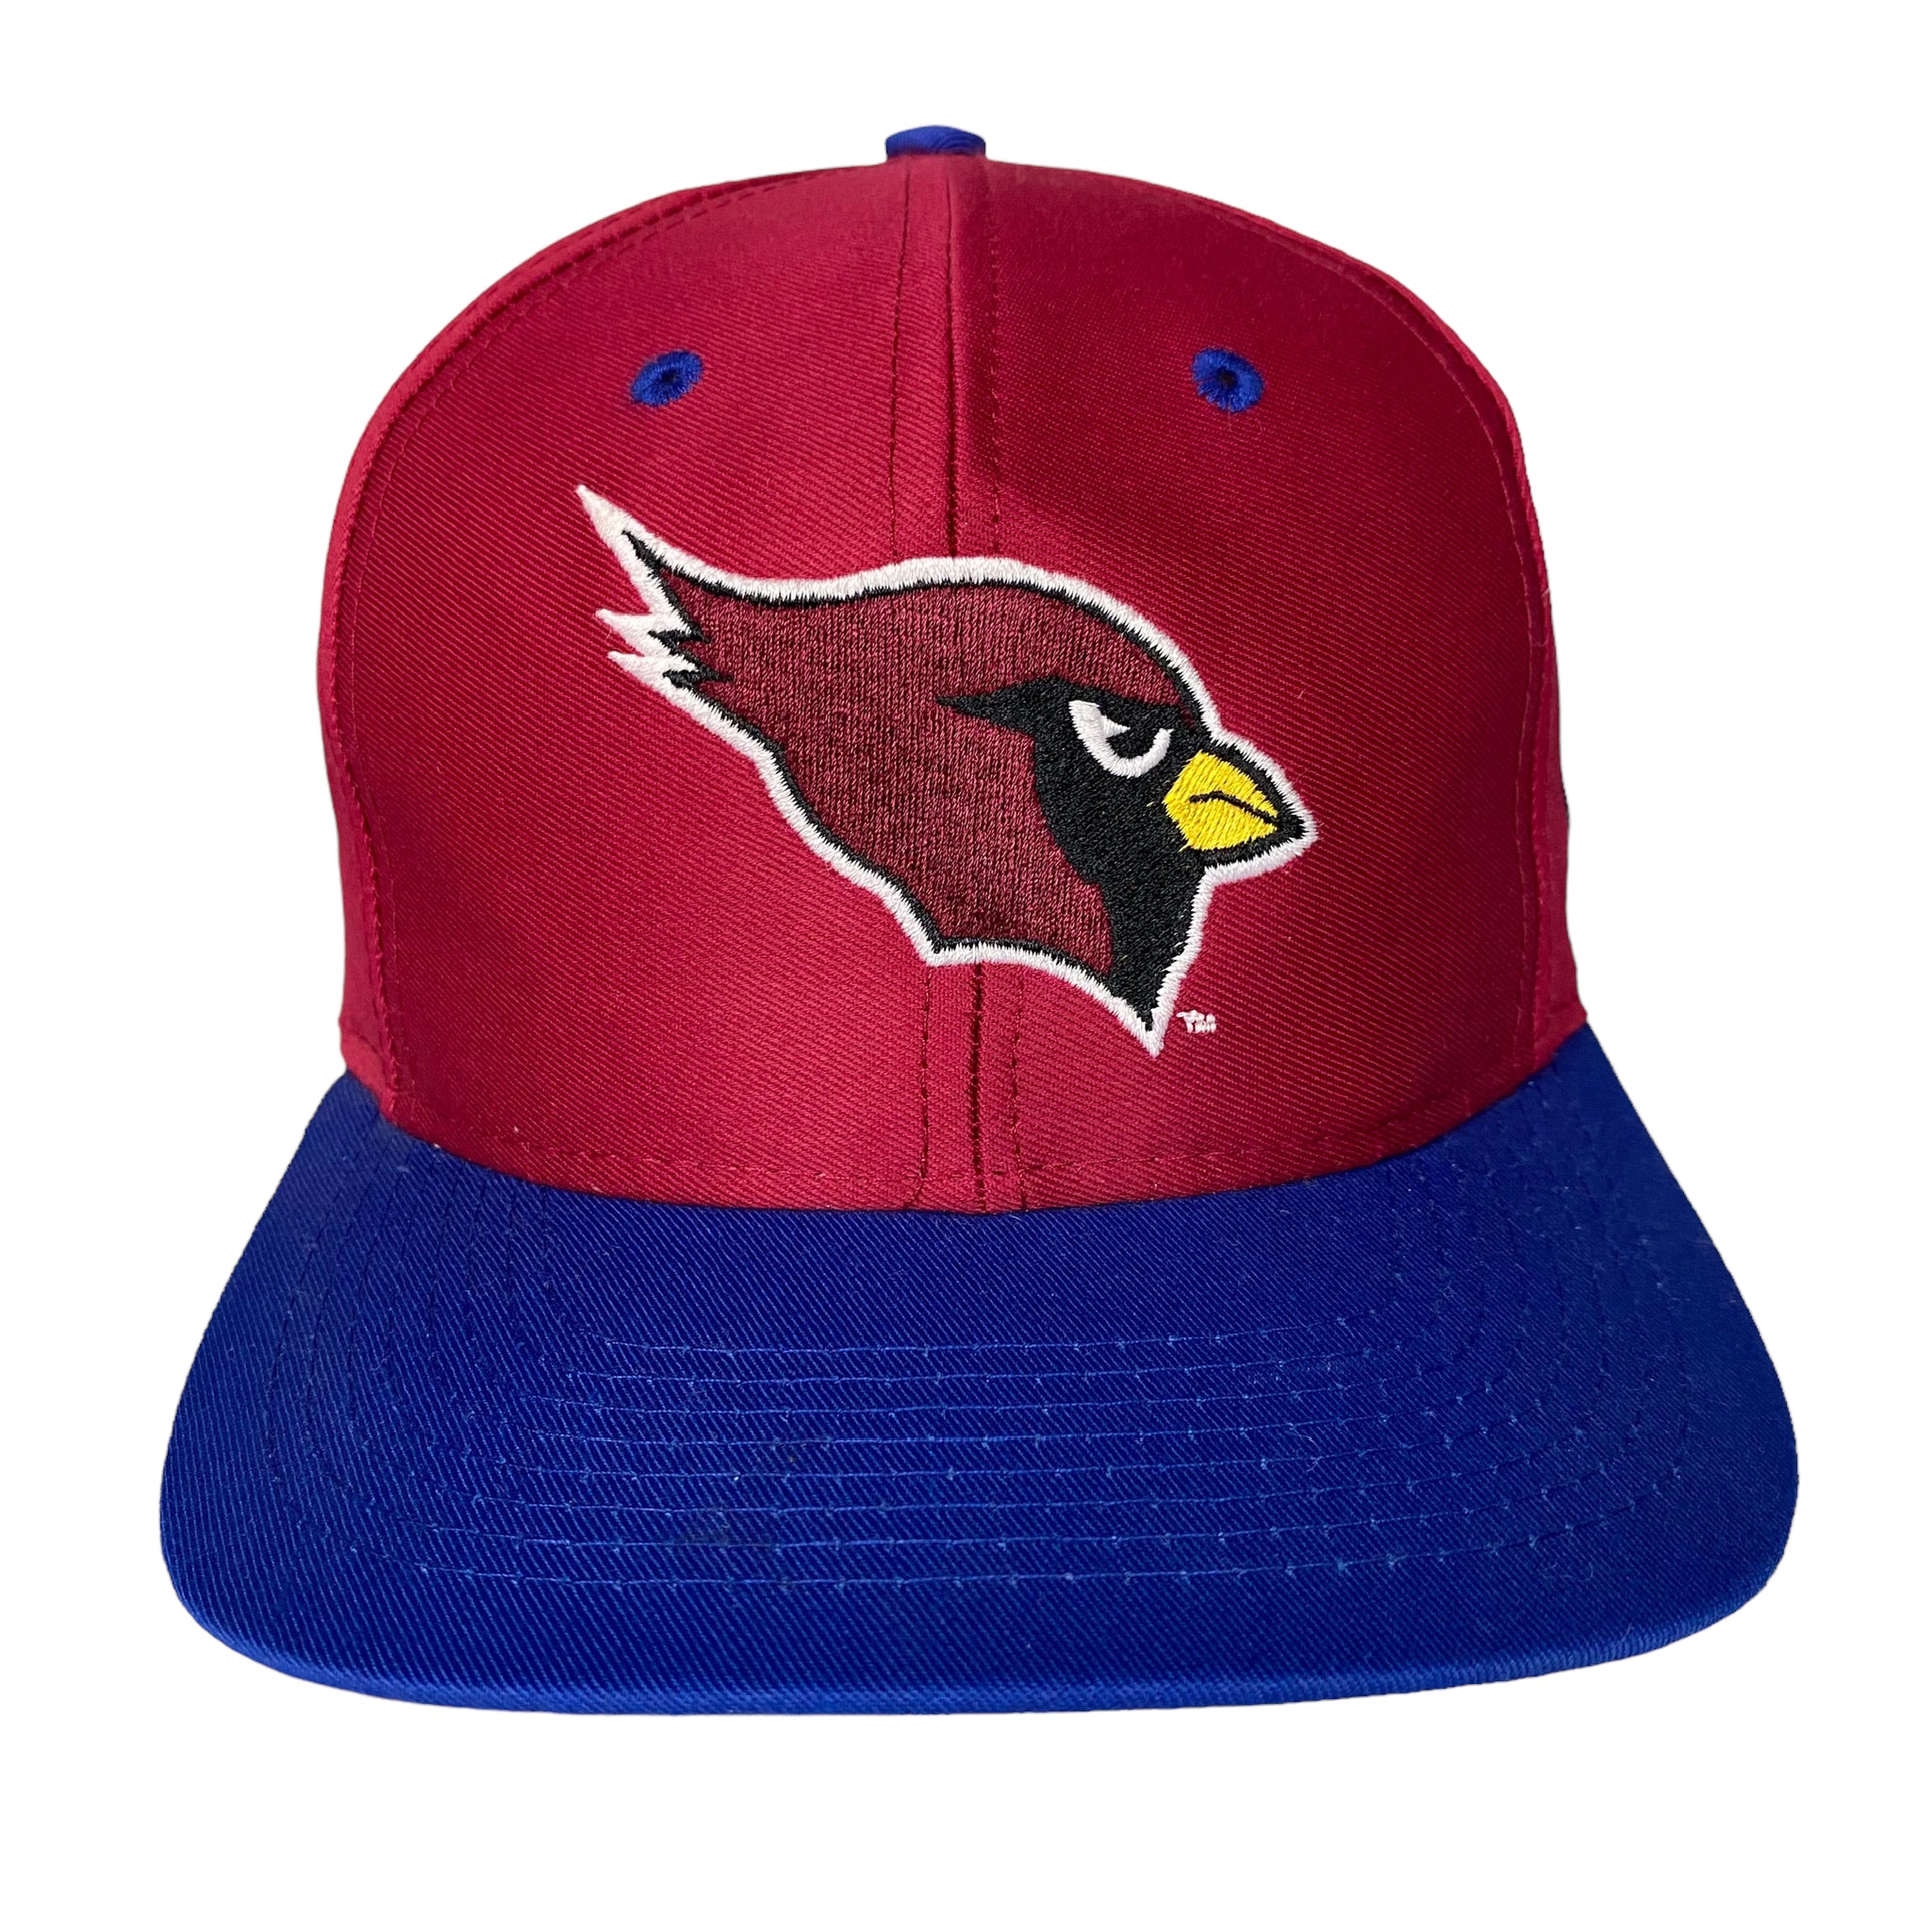 Vintage Arizona Cardinals SnapBack